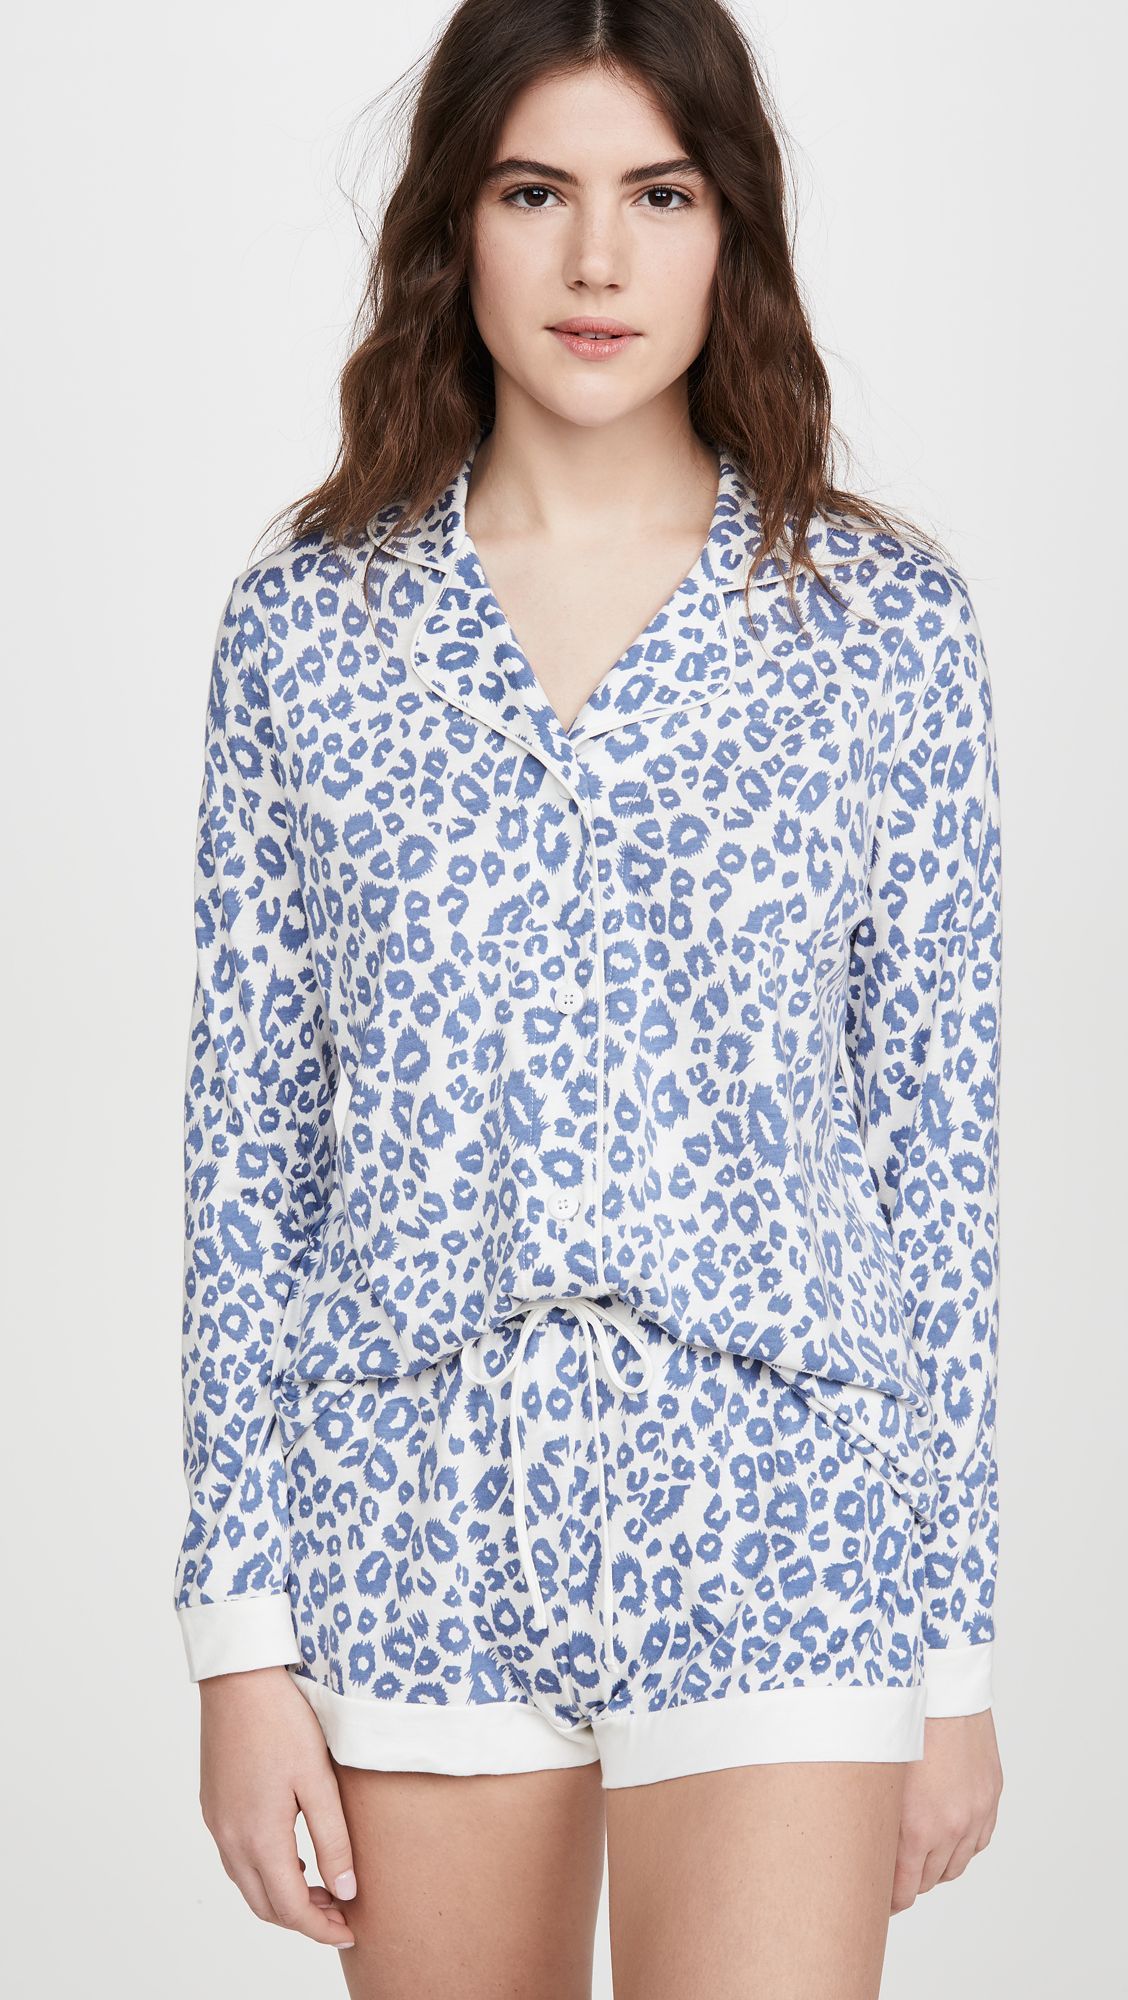 Details about   SANQIANG Women's Cute Bird Pattern Pajamas Set Cotton Sleepwear Soft Pj Set